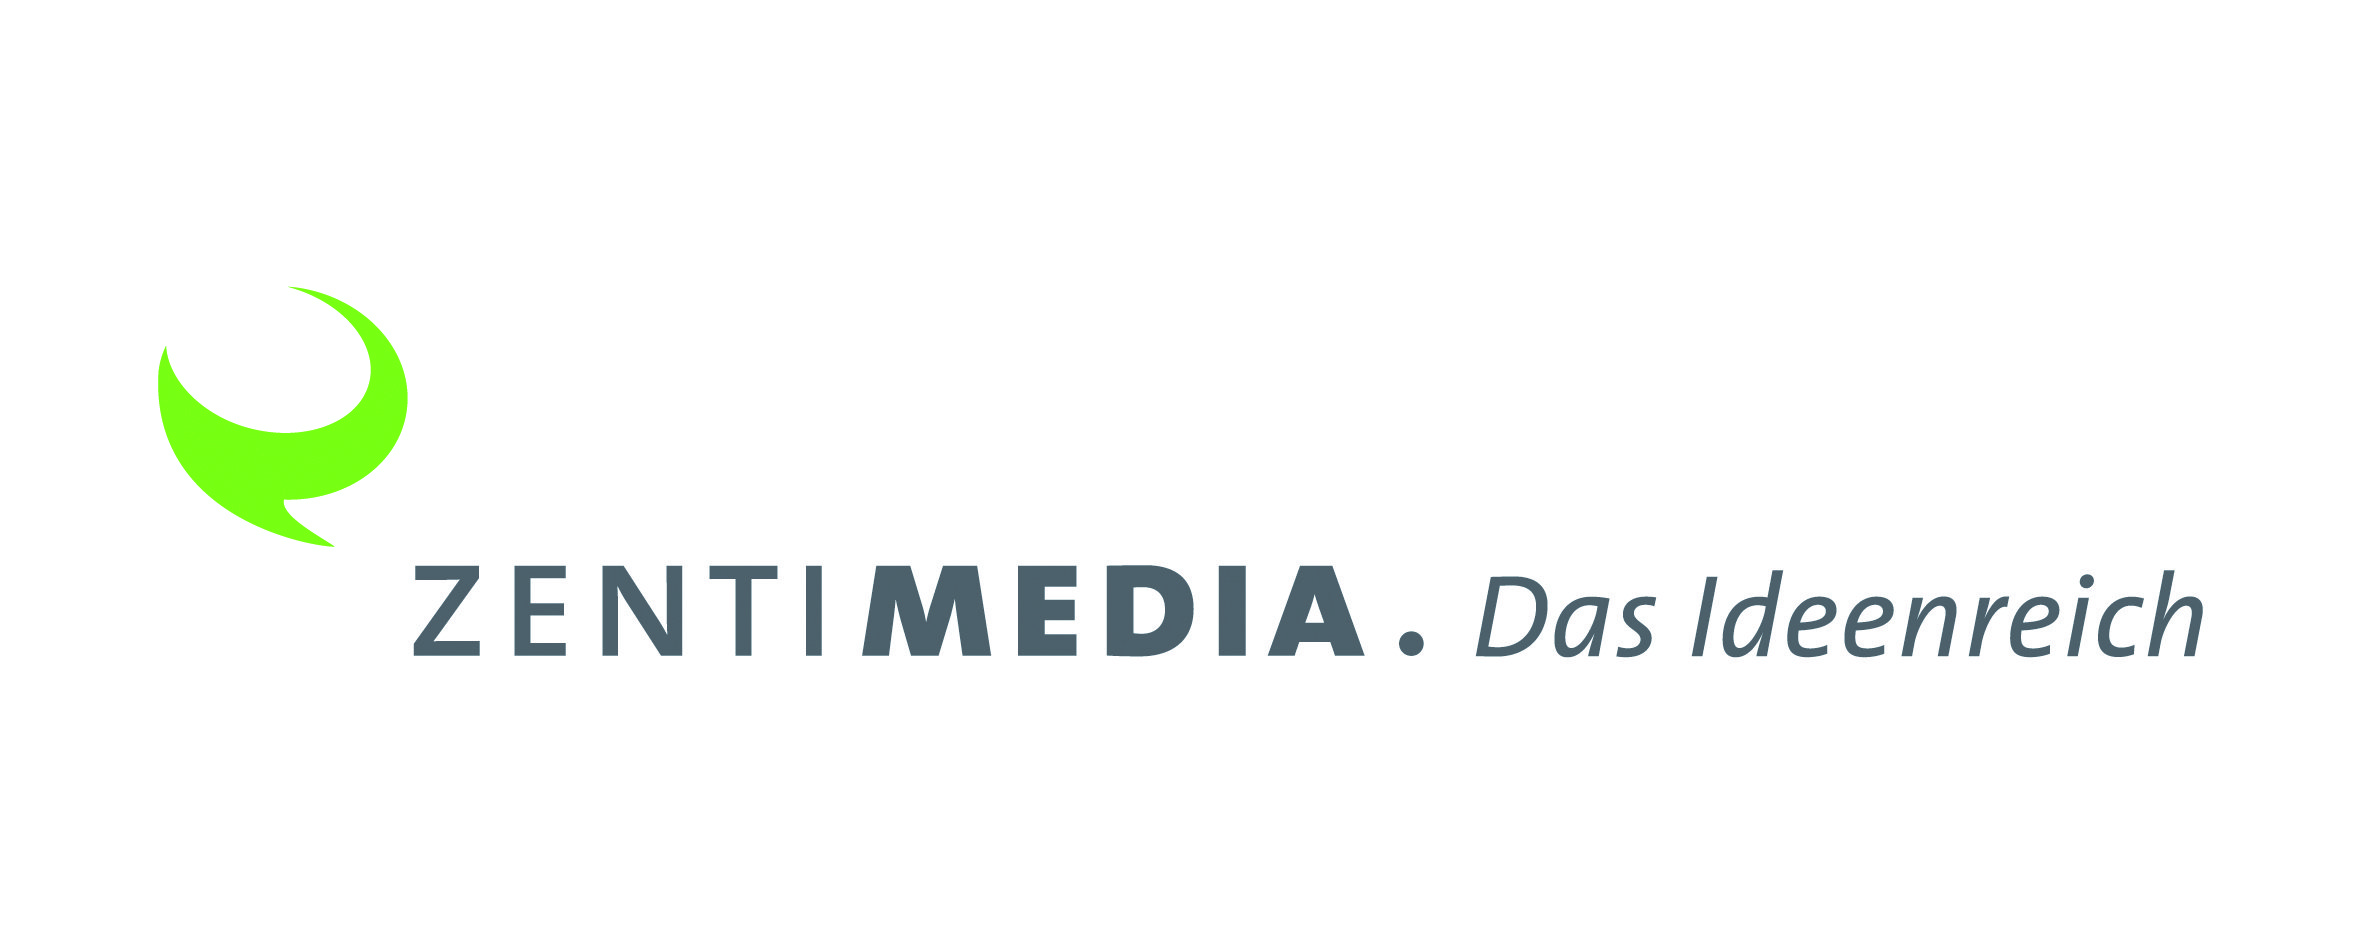 zenit media logo